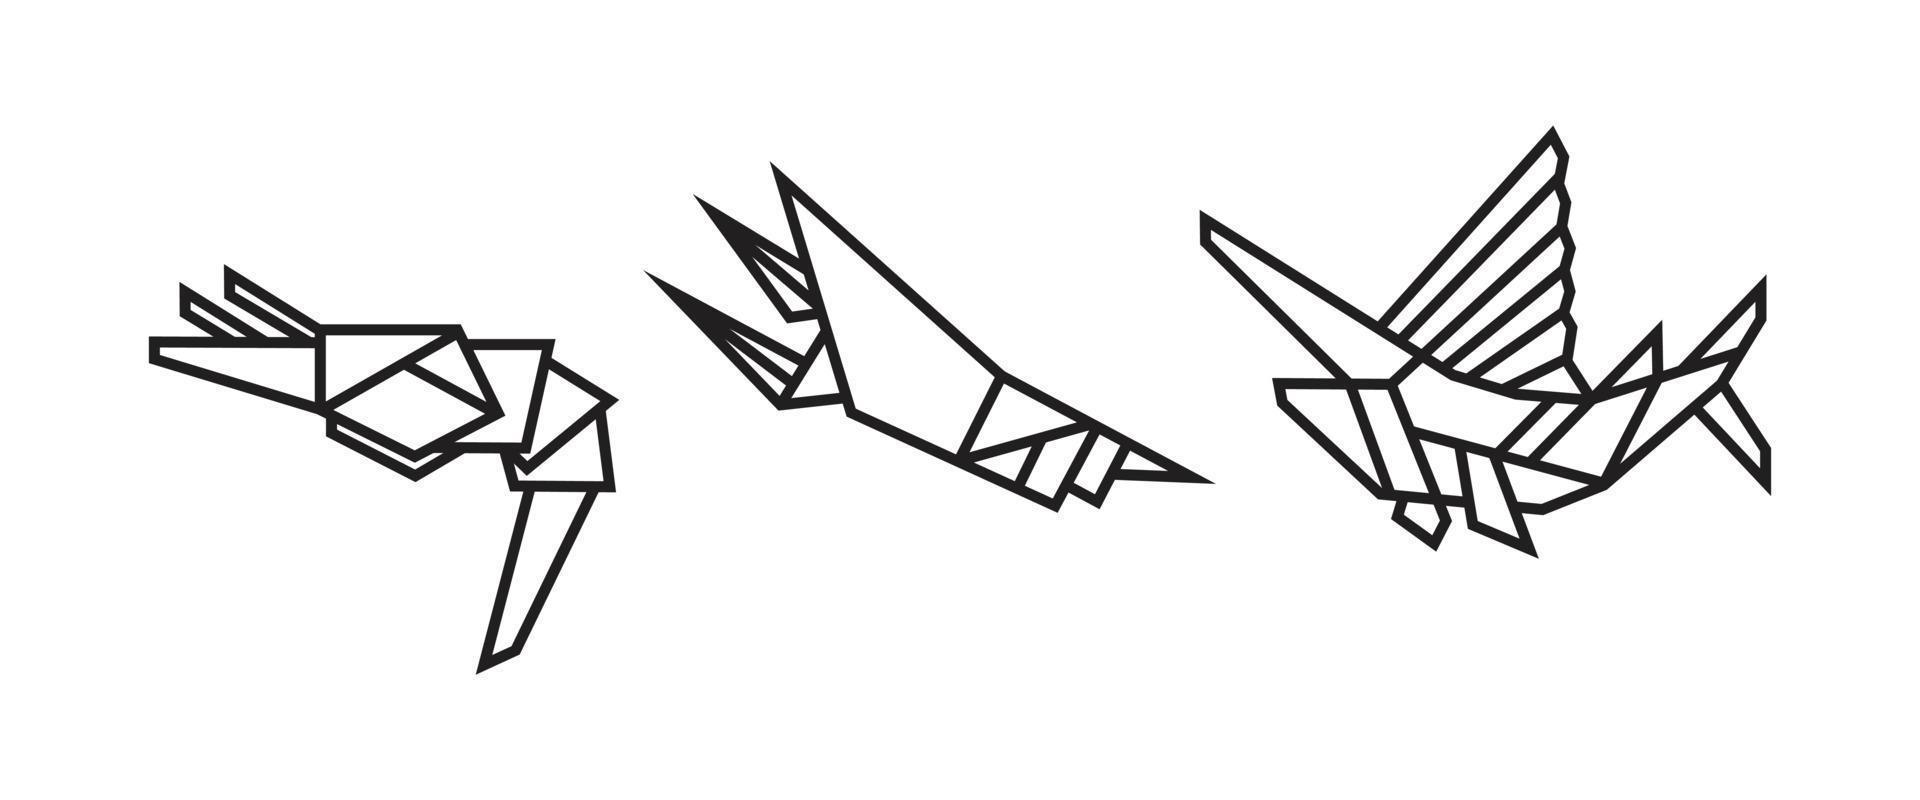 fisk illustrationer i origami stil vektor